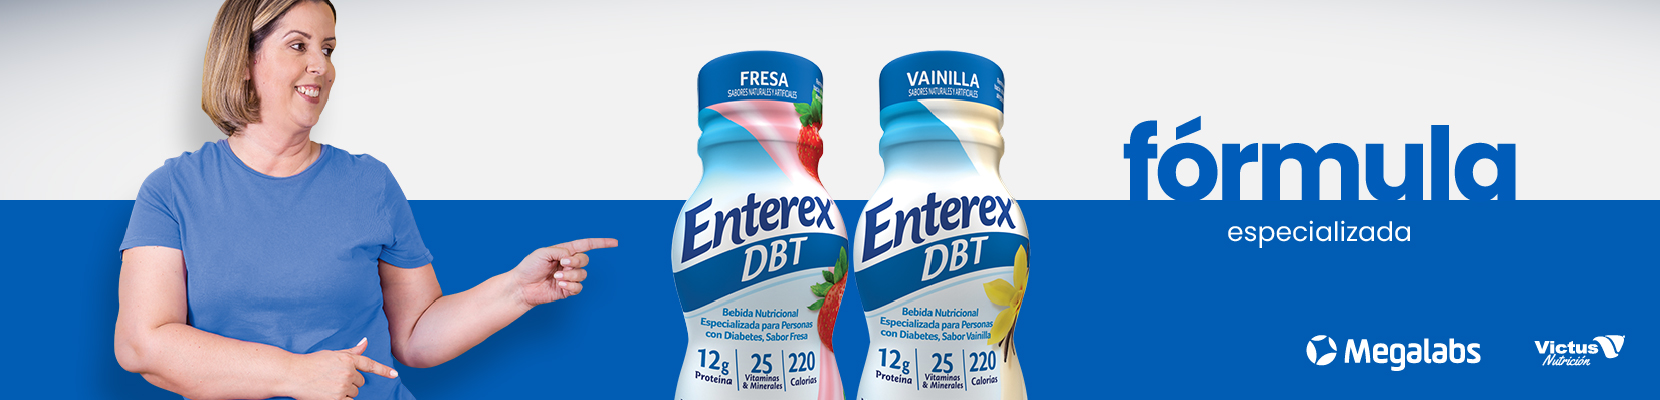 Enterex DBT